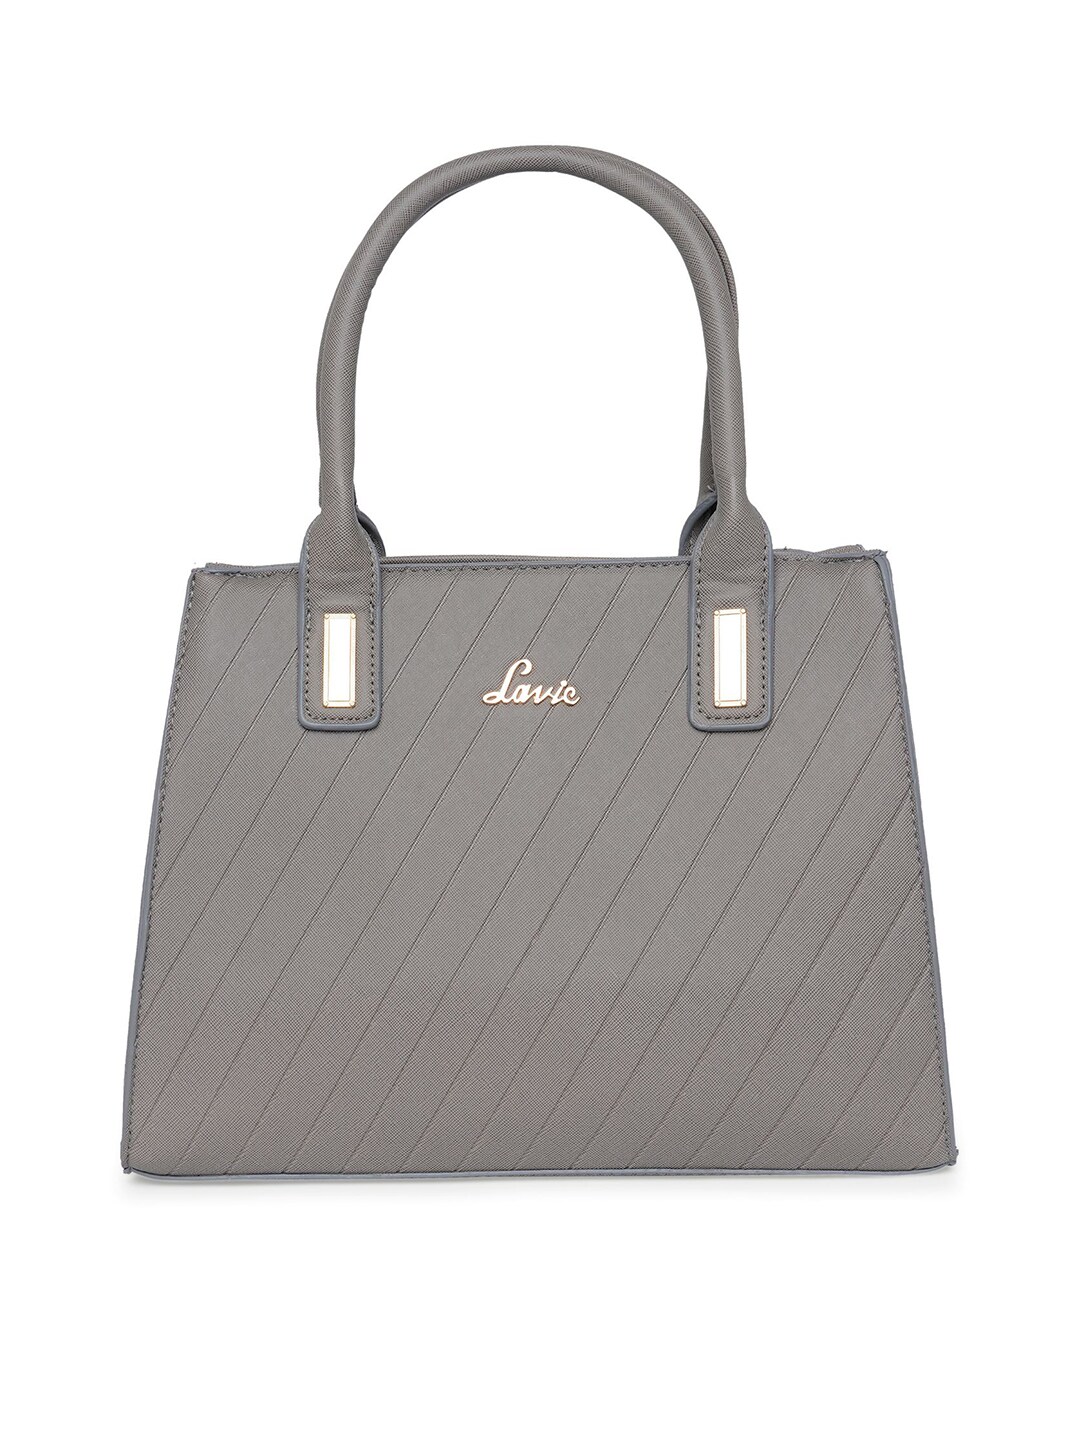 Lavie Grey Structured Handheld Bag Price in India